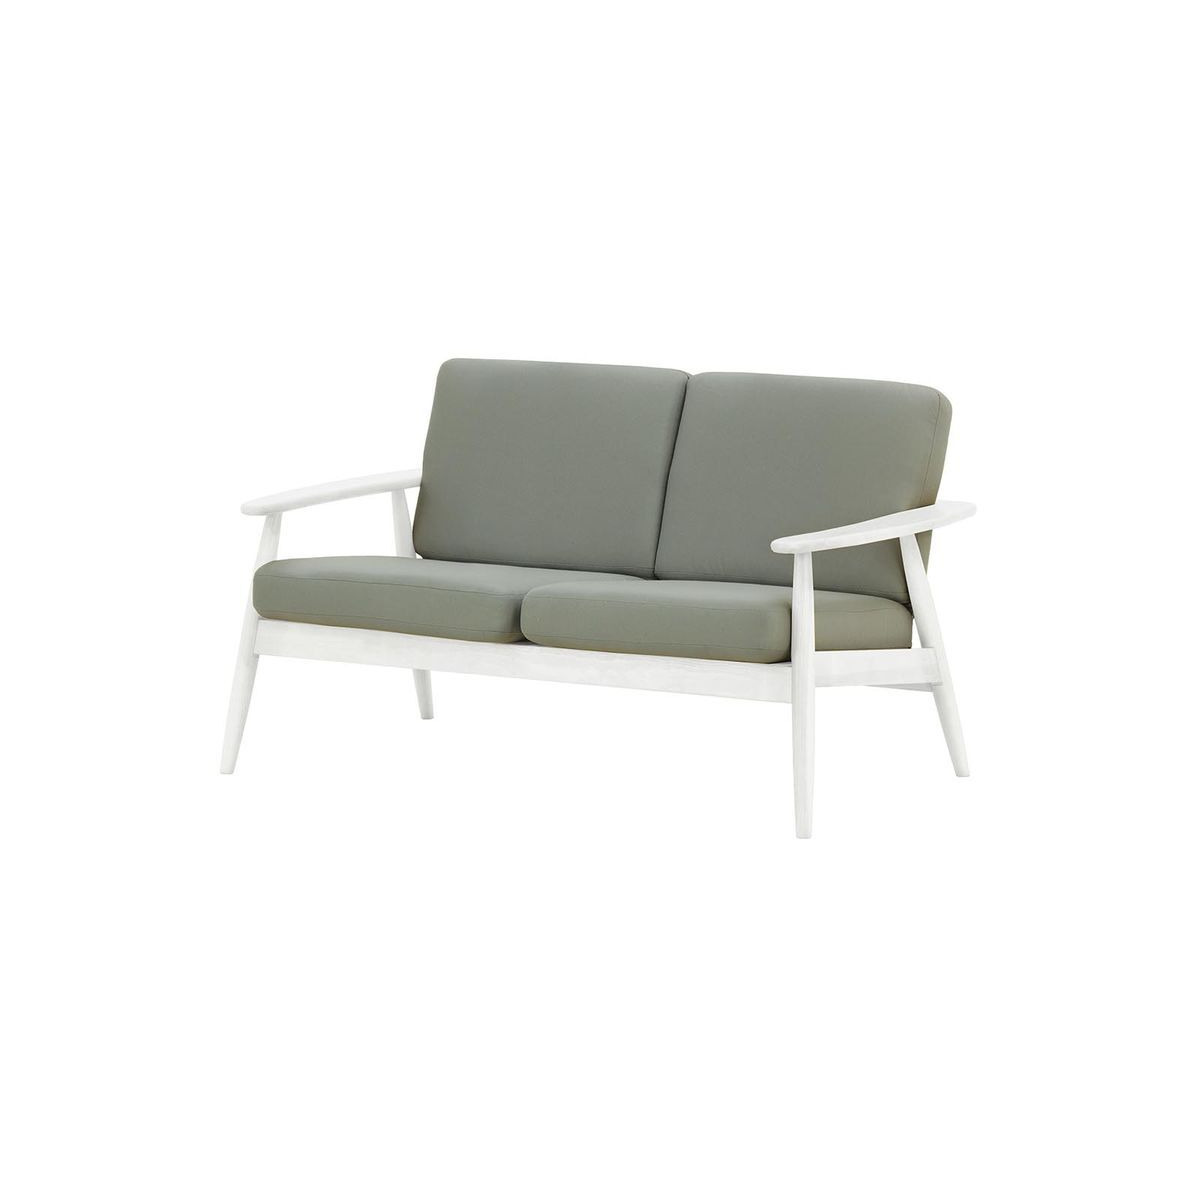 Demure Aqua 2 Seater Garden Sofa, grey, Leg colour: 8035 white - image 1